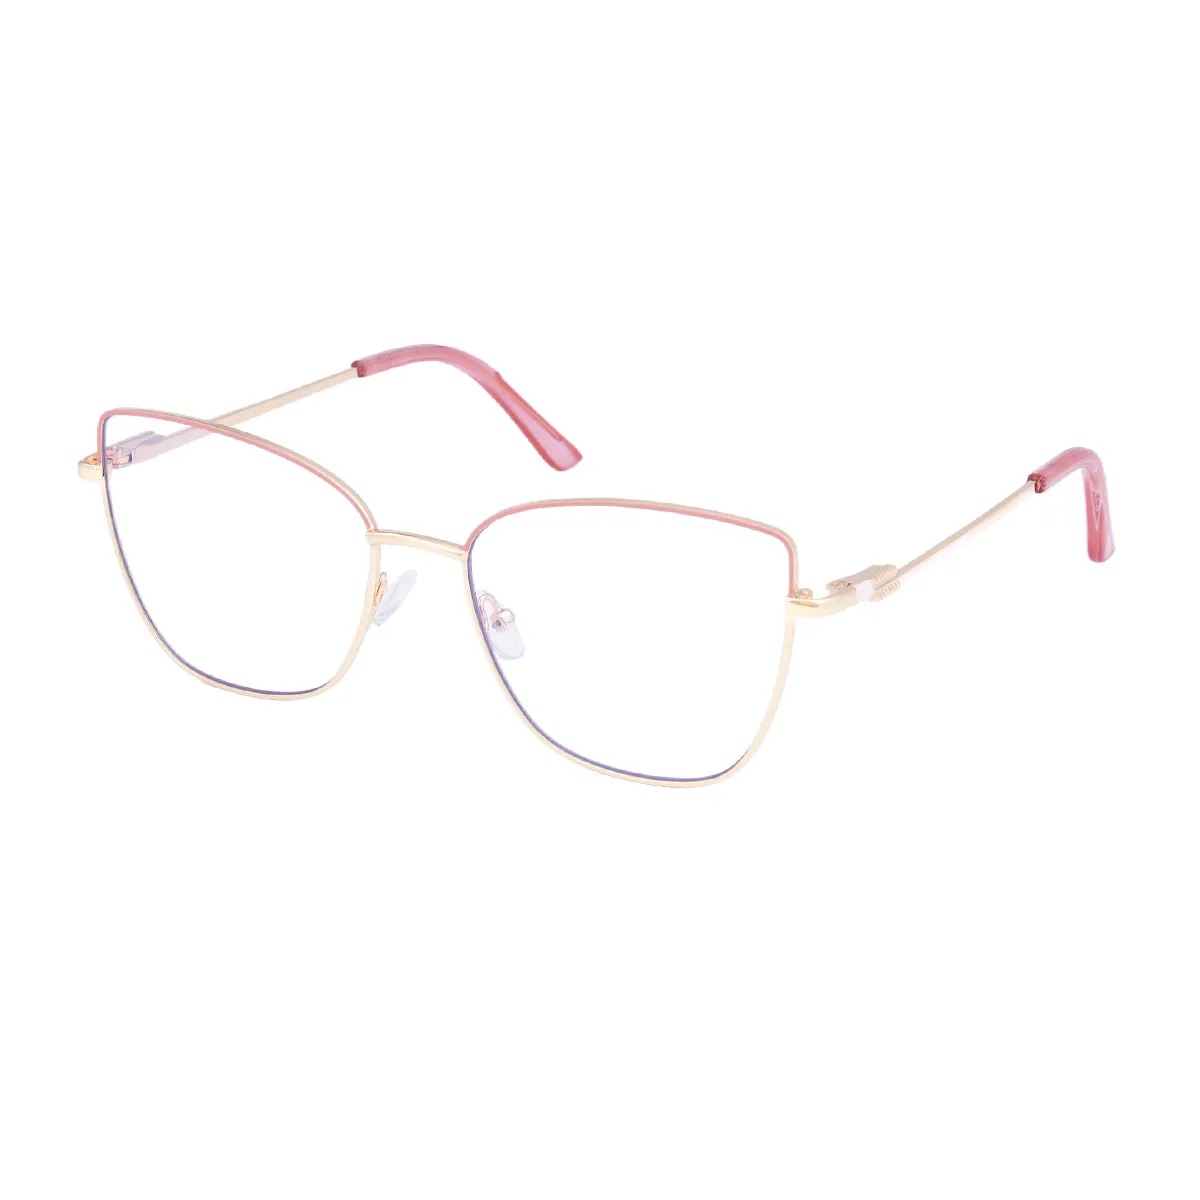 Eudora - Cat-eye Gold/Pink Glasses for Women - EFE